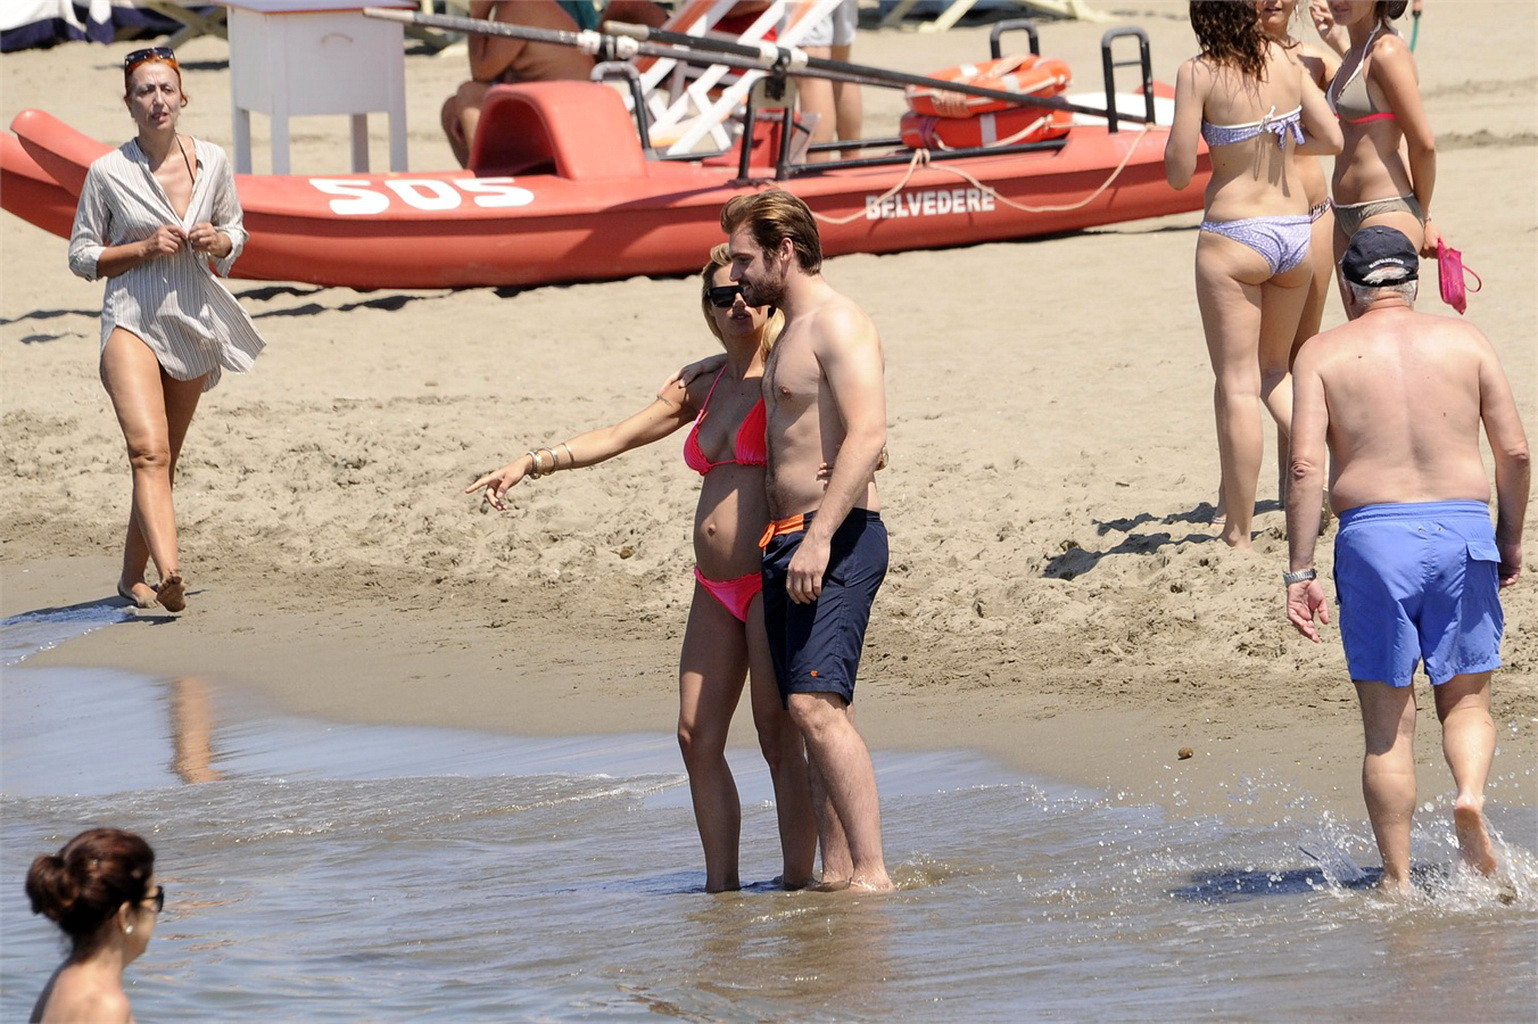 Michelle hunziker embarazada con un bikini en la playa de forte dei marmi, ita
 #75227849